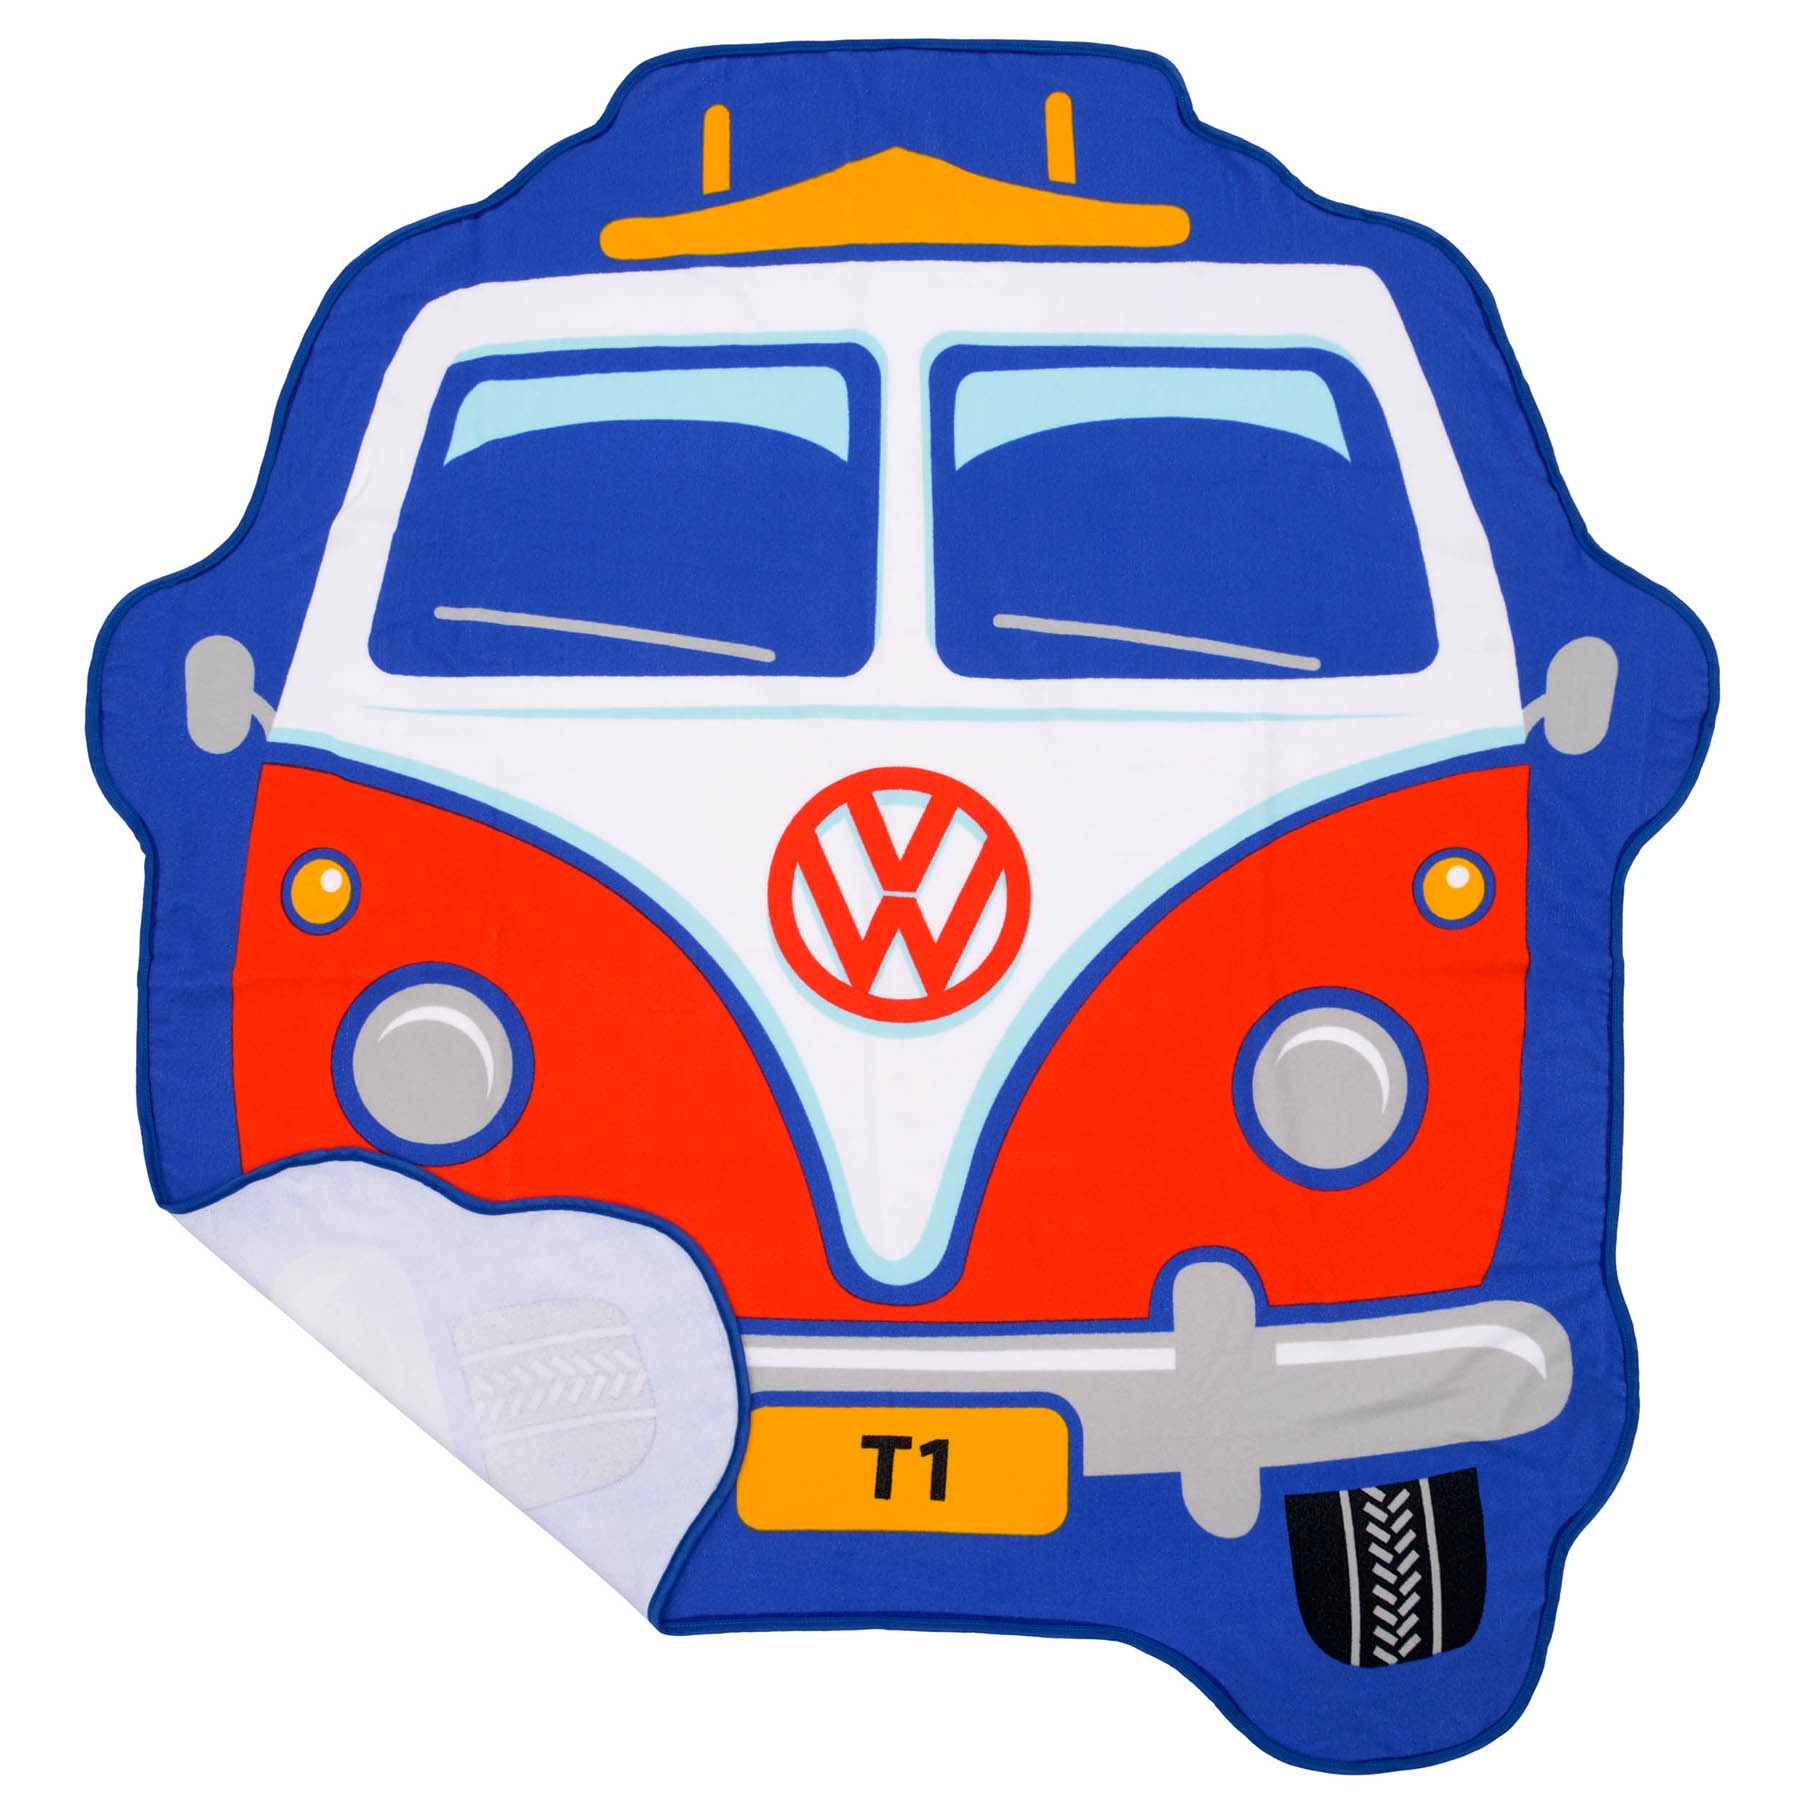 VW Bulli Handtuch 75x150 cm, VW Bulli Geschenke, VW Bus Badetuch  Baumwolle